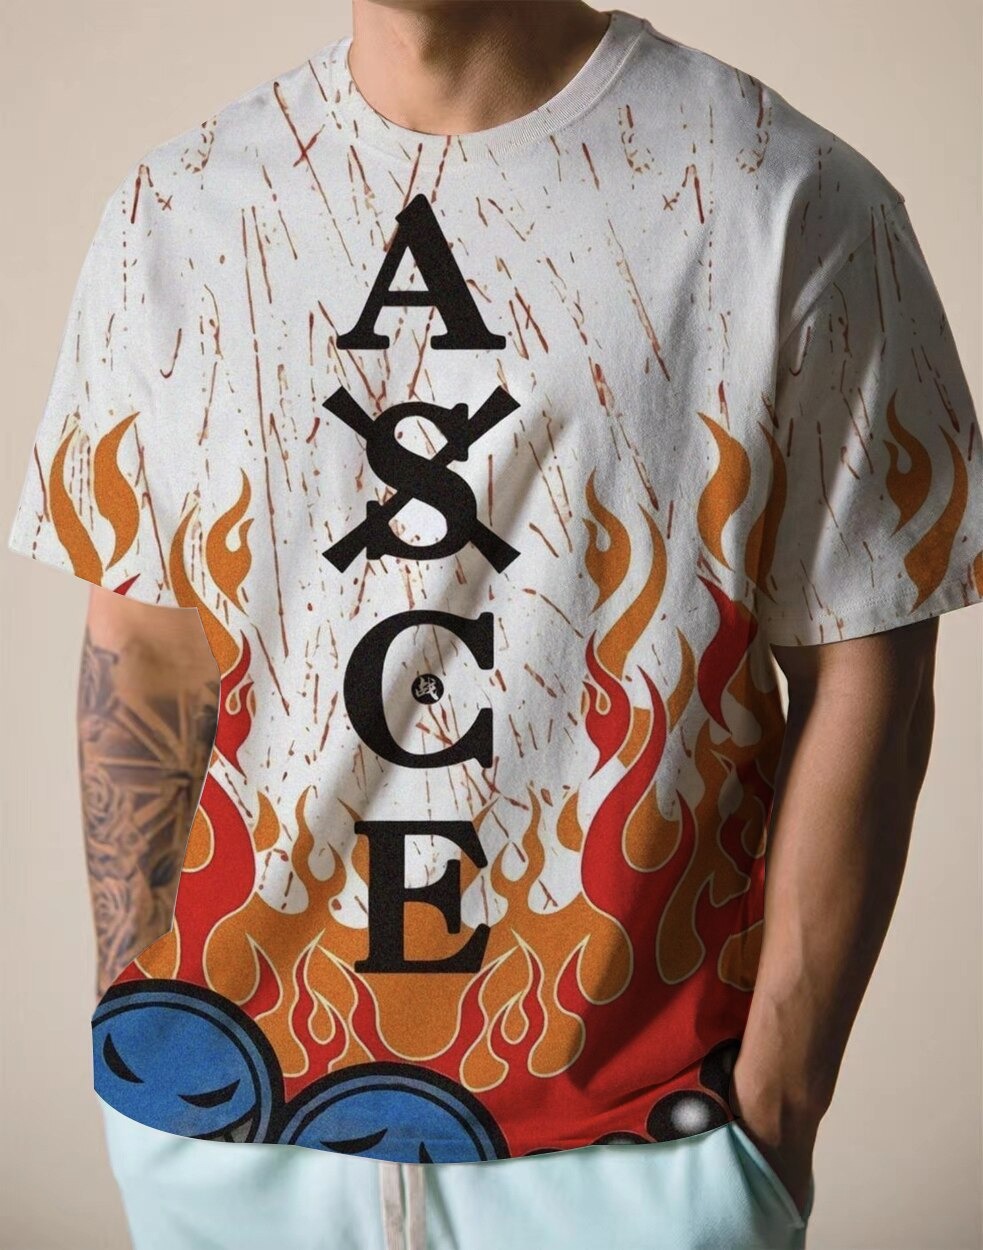 Xtreme Couture Affliction Men's T-Shirt LOCKDOWN Tan Tattoo Biker S-5XL $40  | eBay